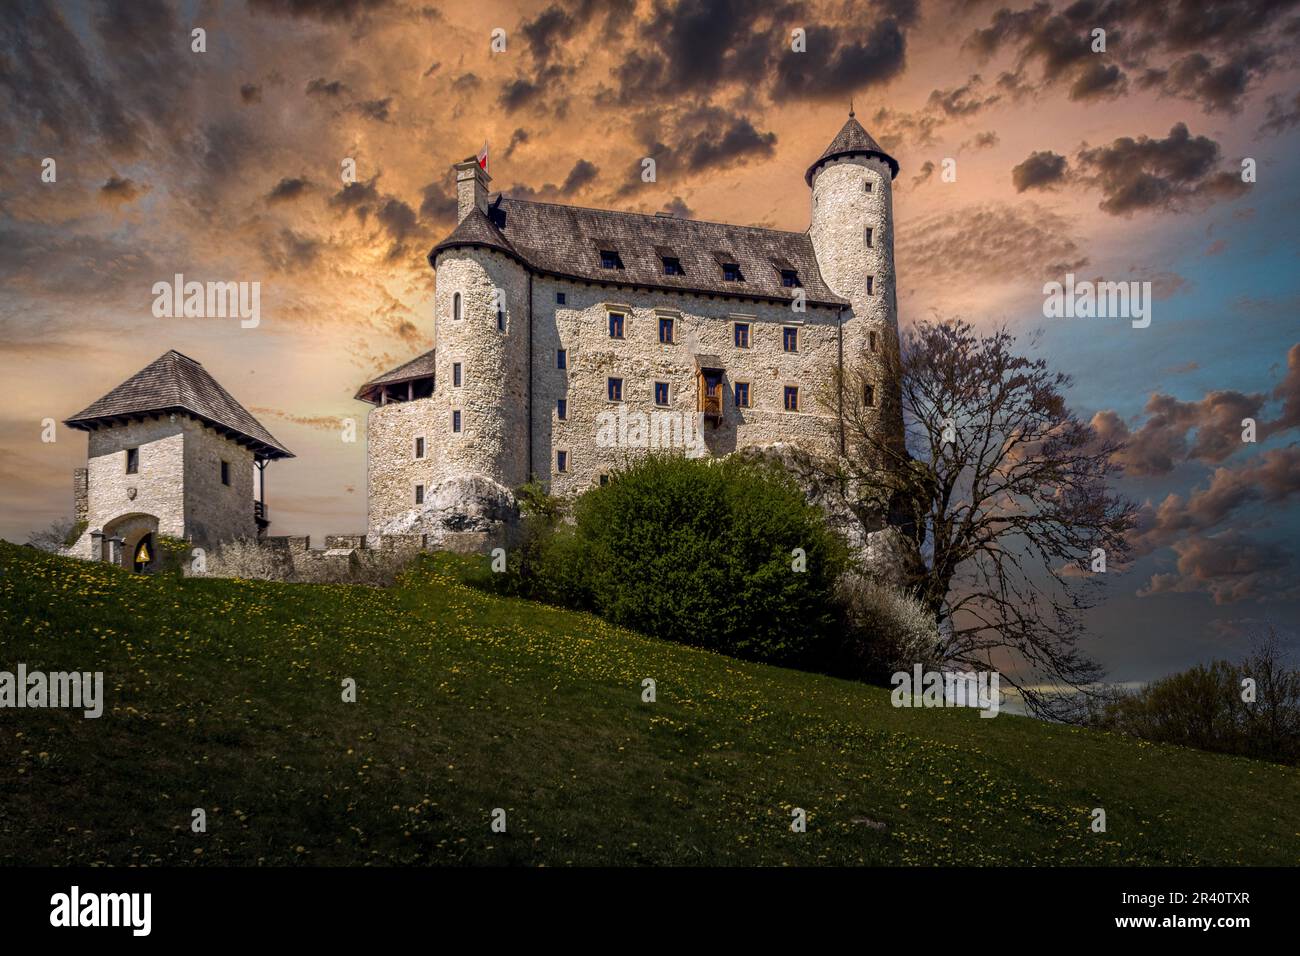 Castle in the village of Bobolice, Poland. Stock Photo